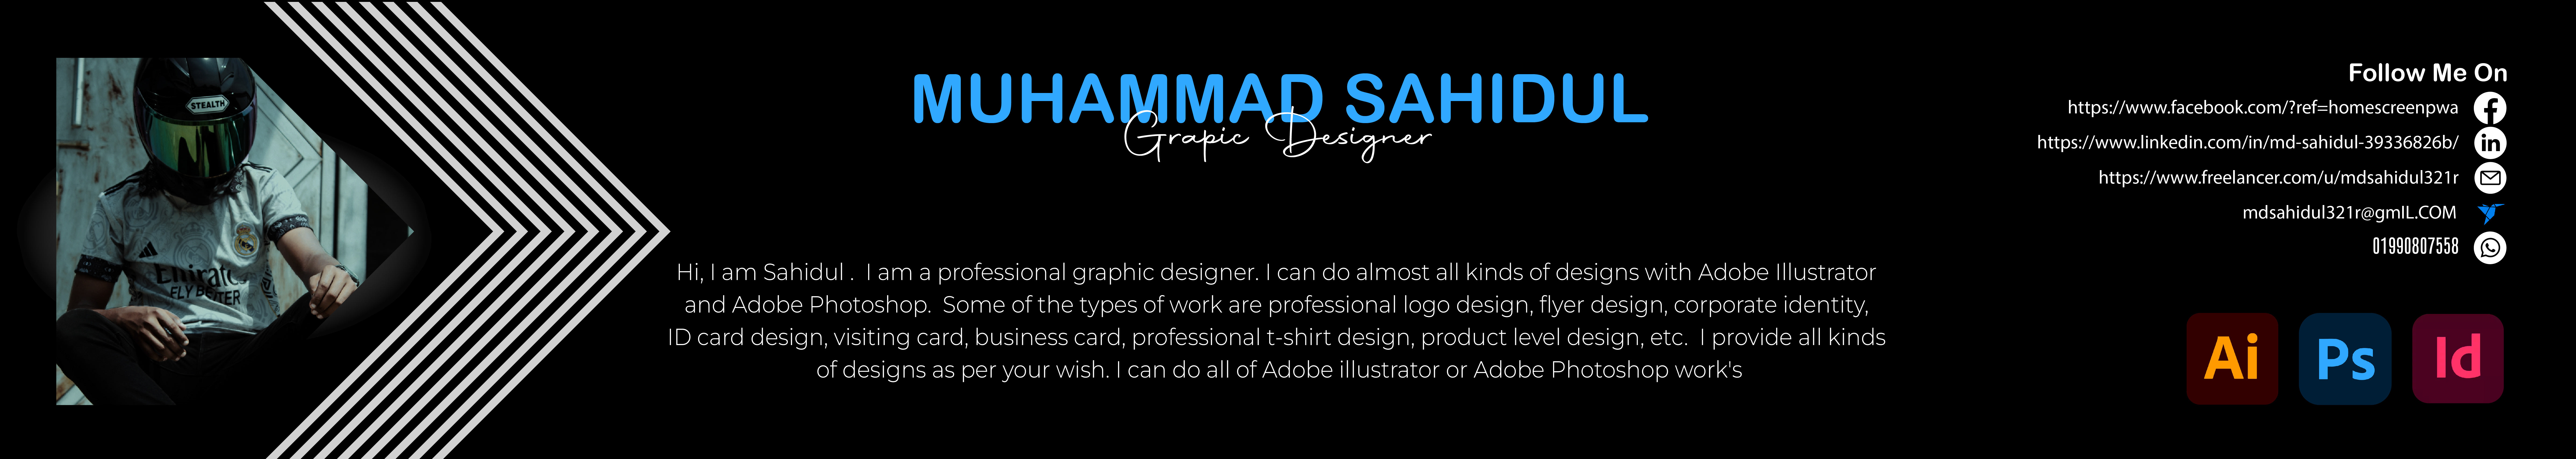 Muhammad Sahidul's profile banner